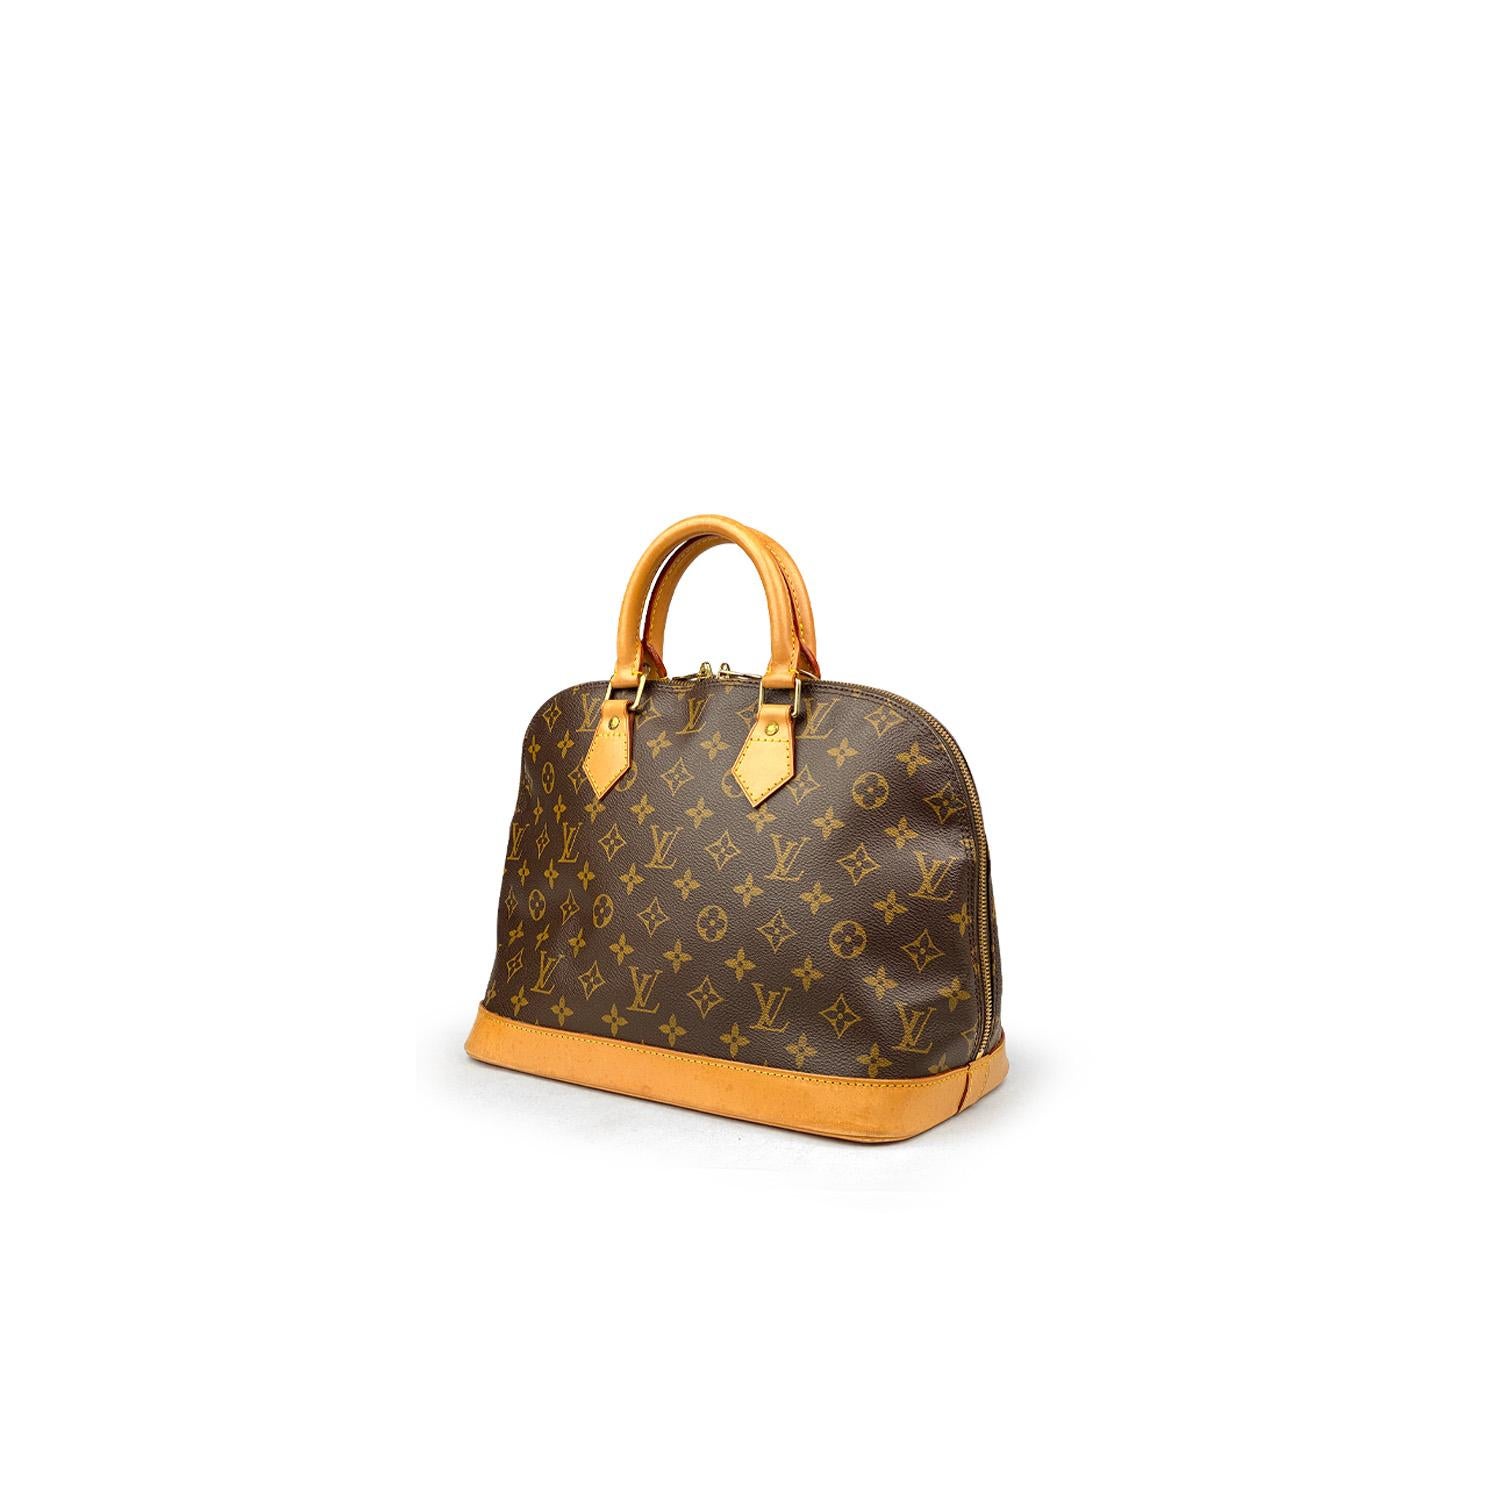 Louis Vuitton Monogram Alma PM Handbag In Good Condition For Sale In Sundbyberg, SE